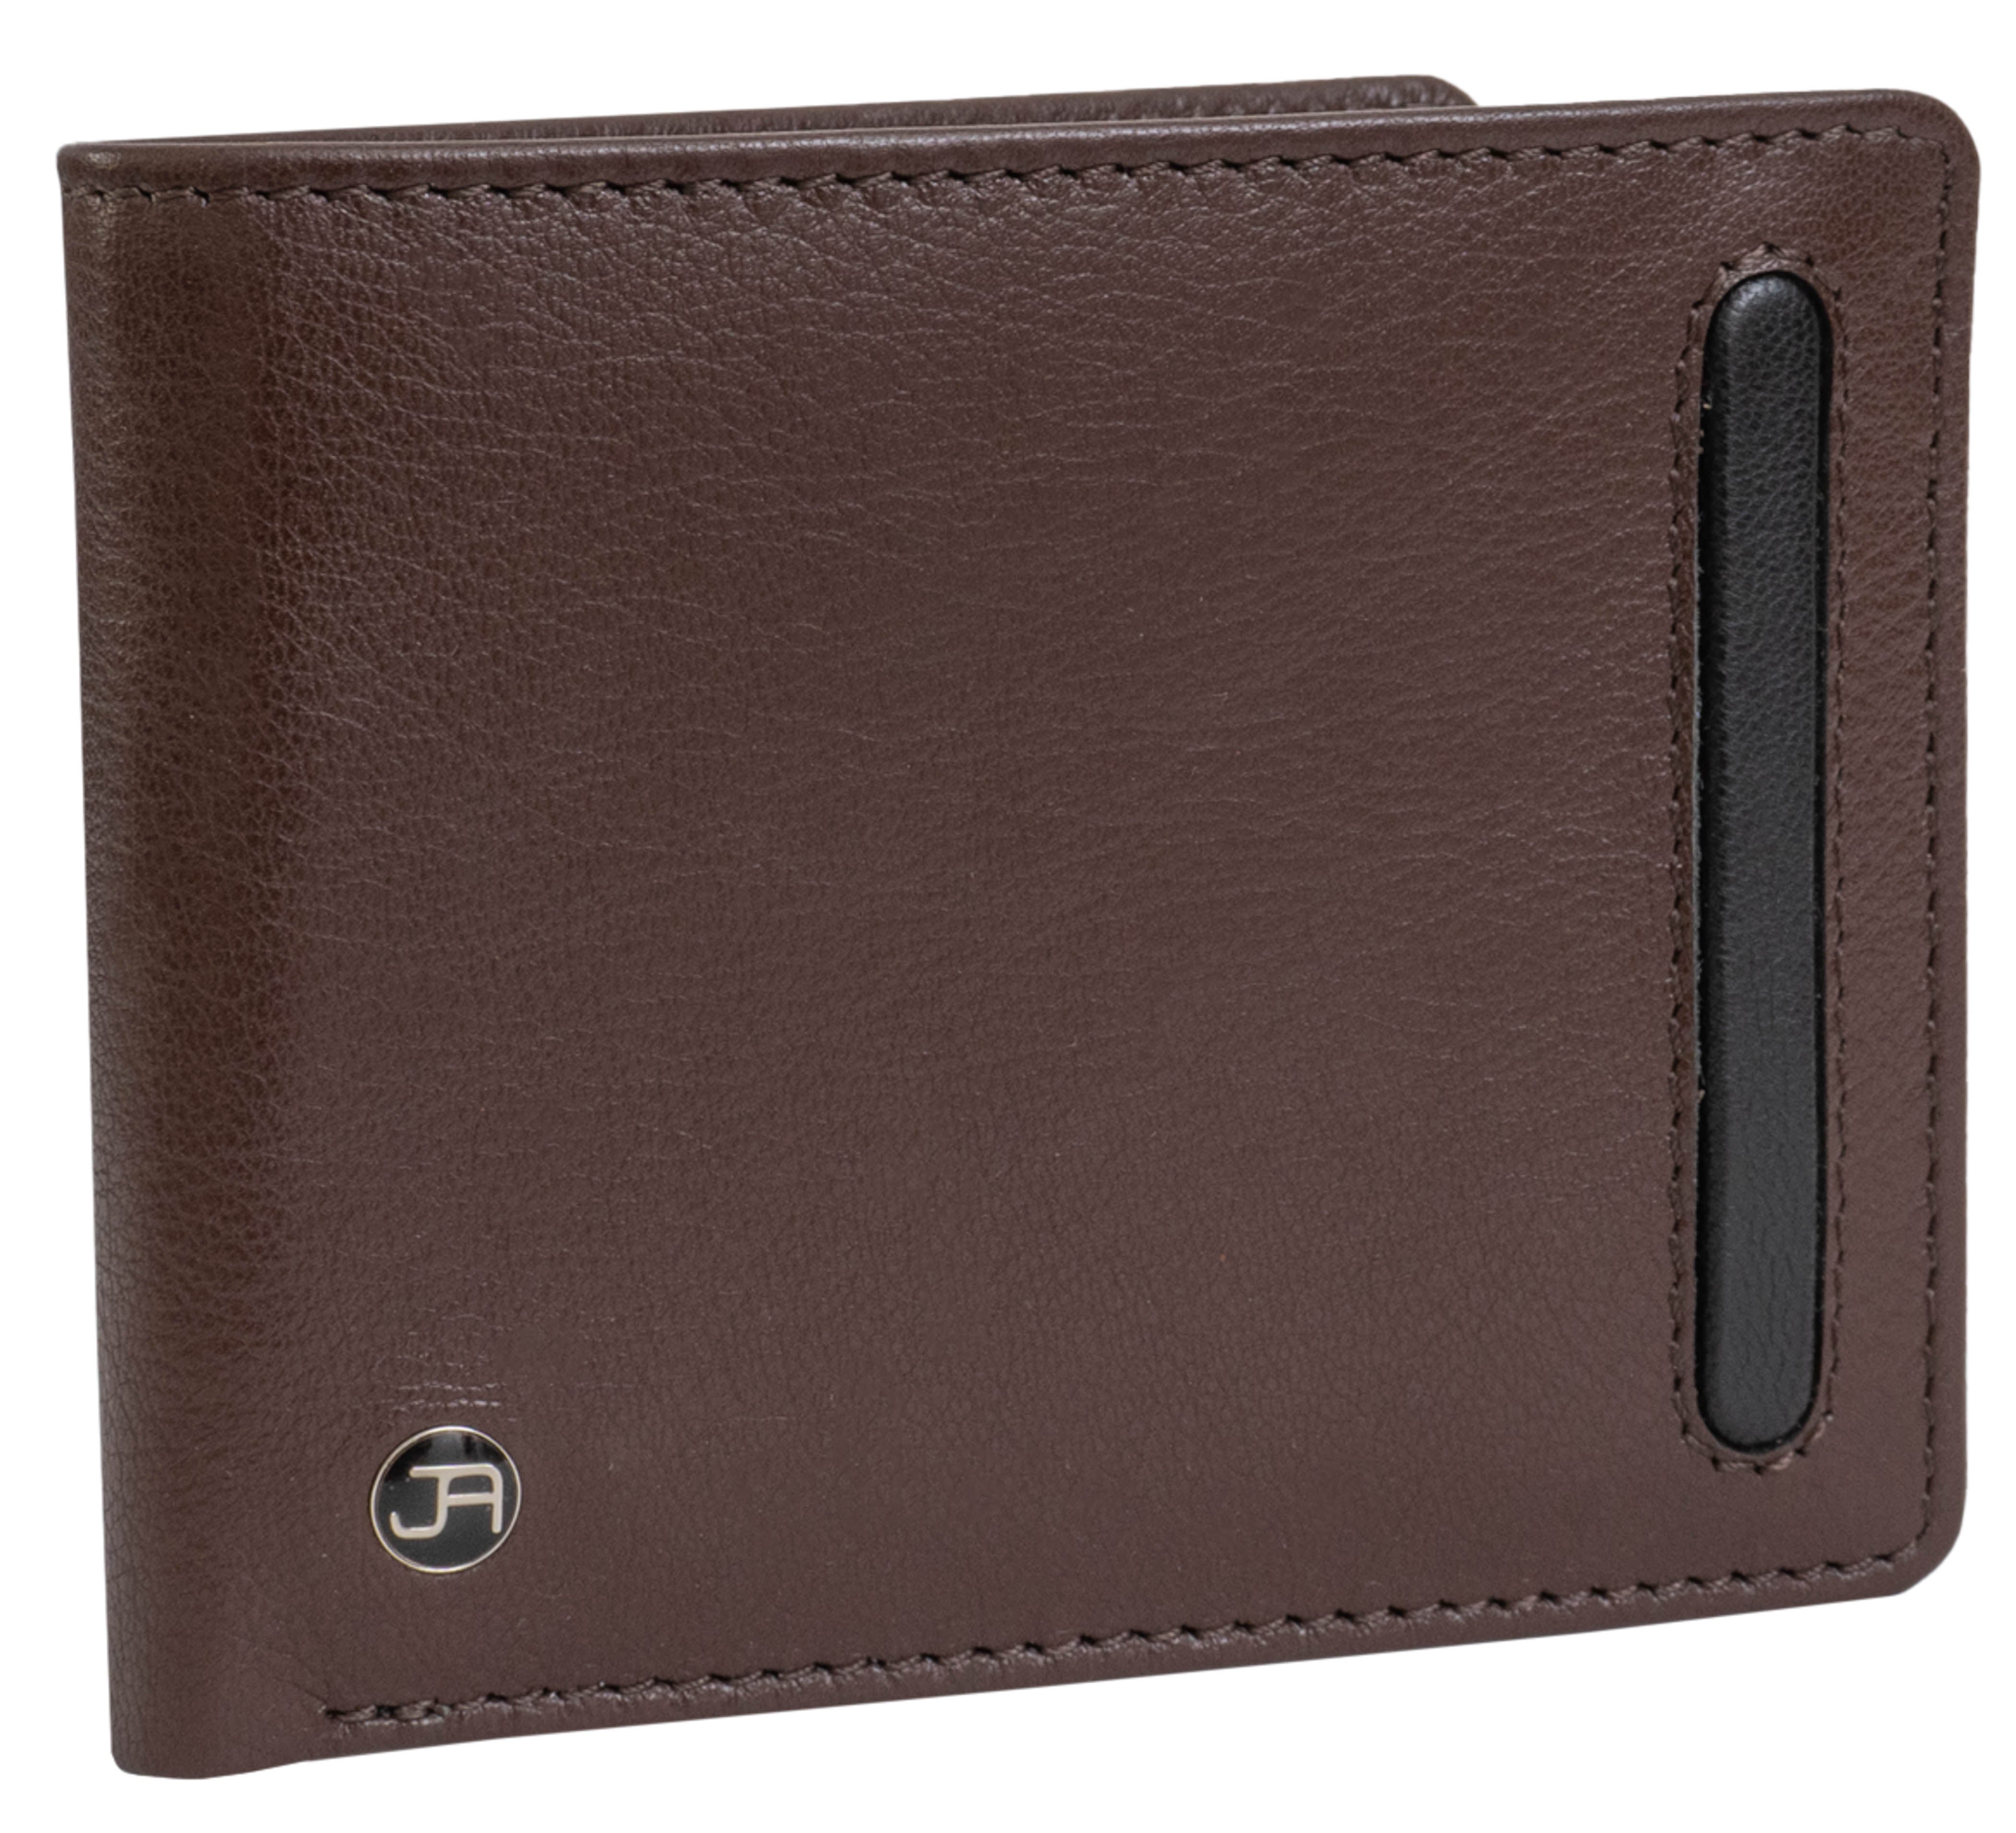 title:Jack Abrahams Bi-Fold RFID Wallet With Flip ID Window Pocket;color:Brown/Black